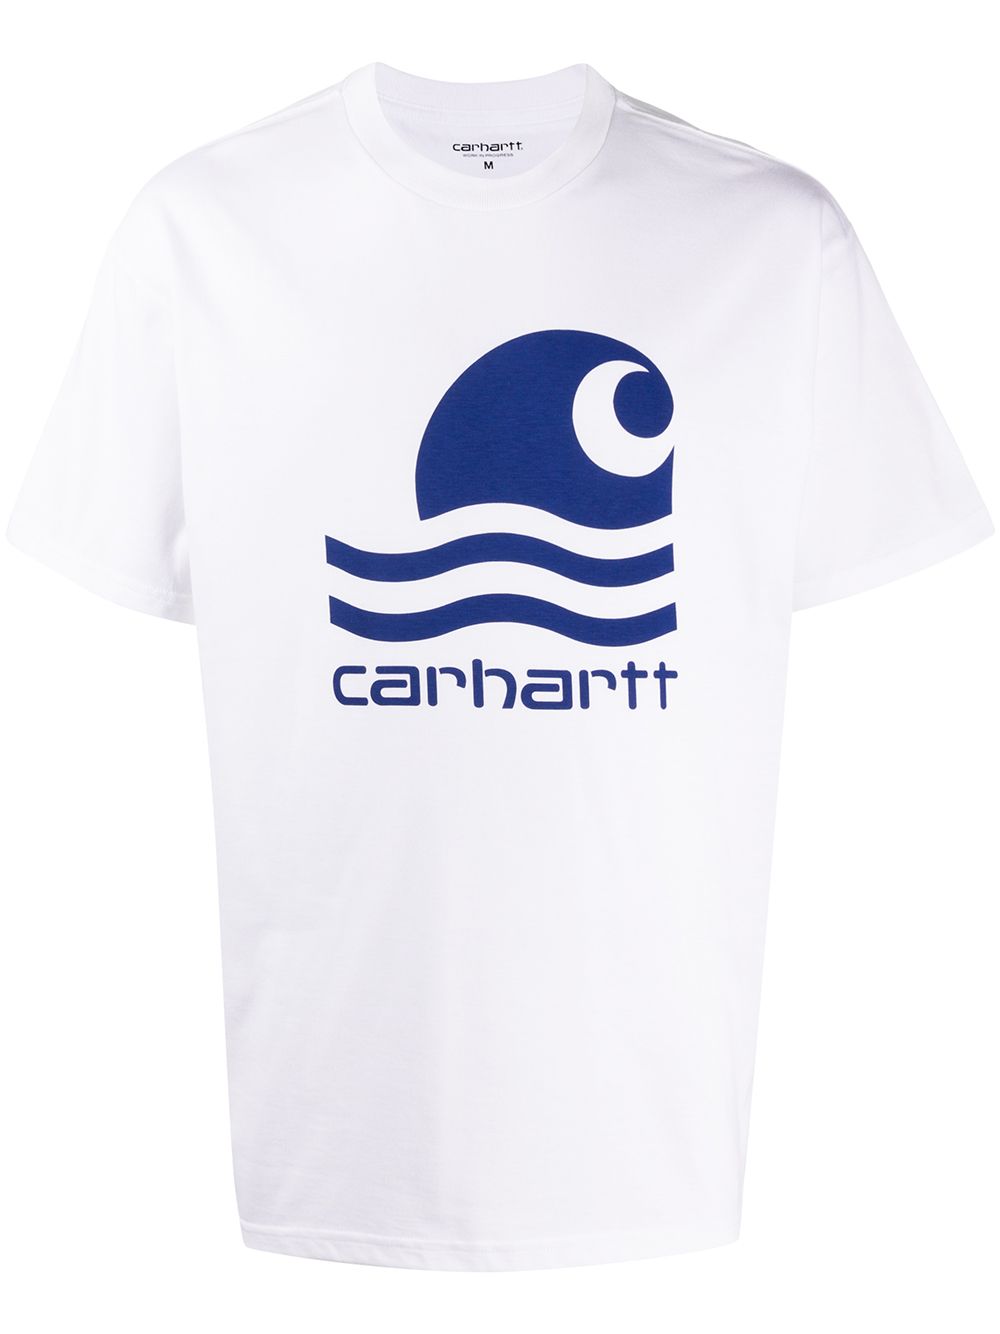 фото Carhartt wip футболка с логотипом